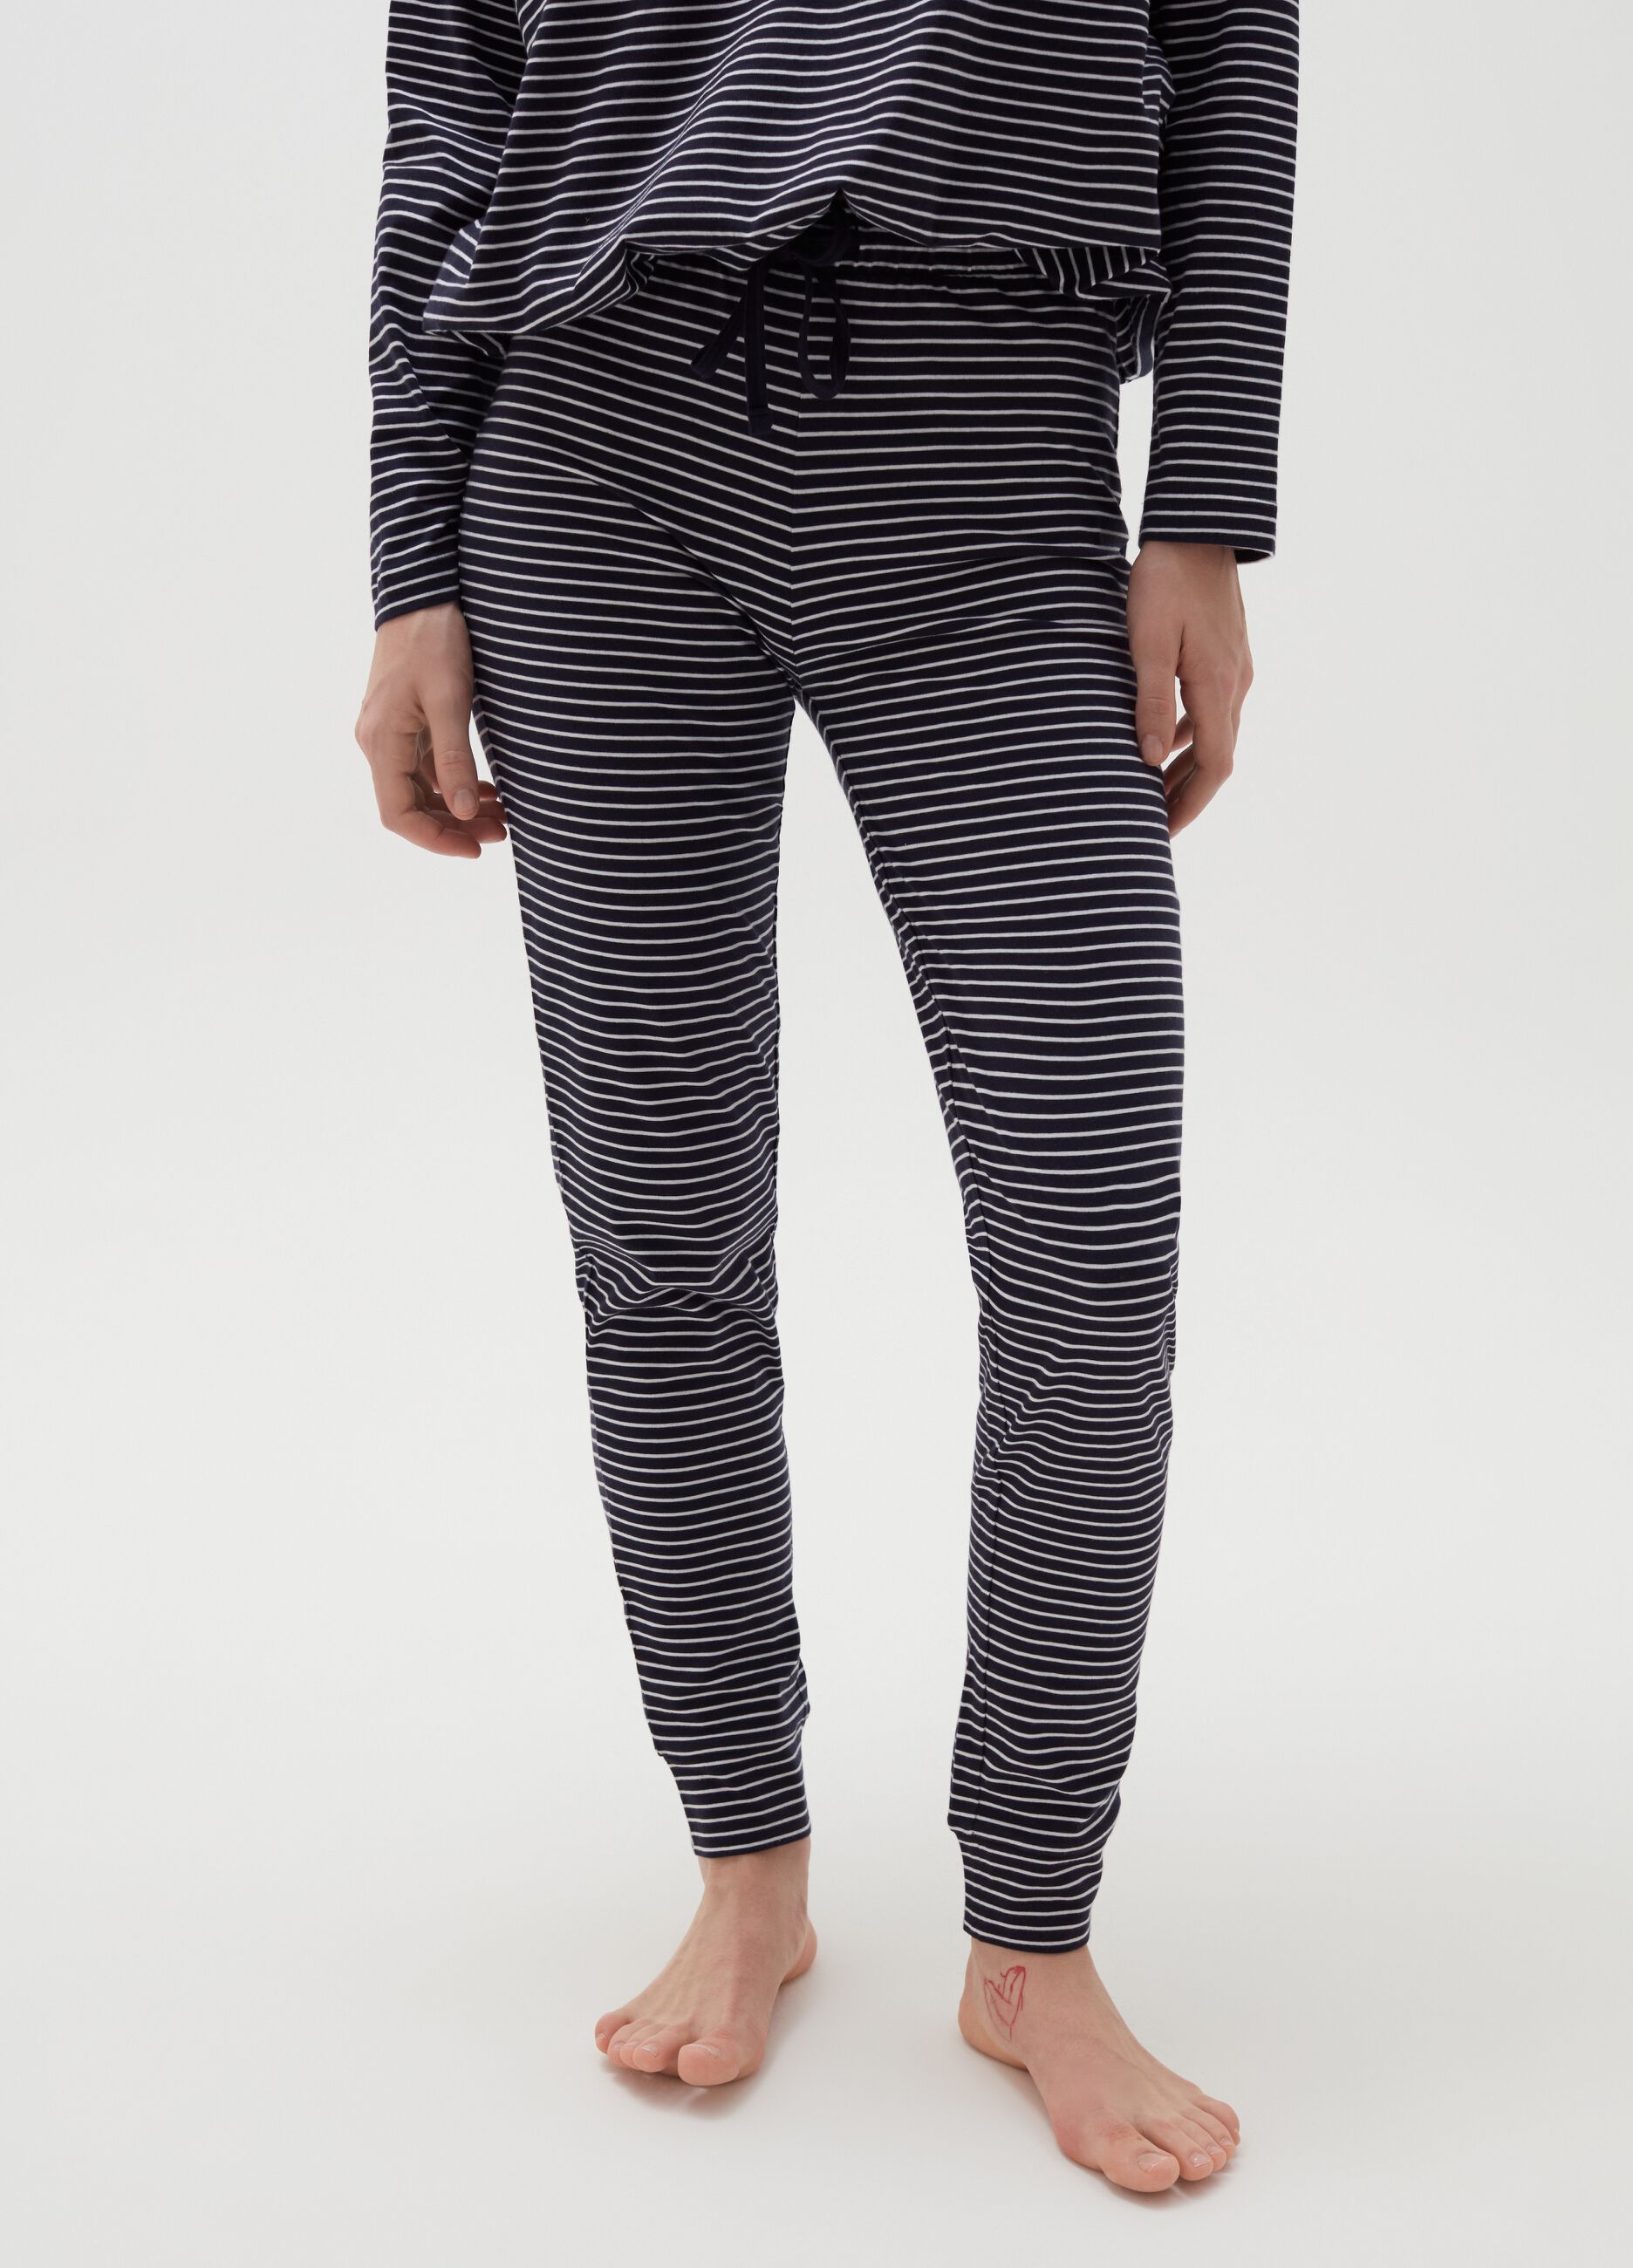 Striped cotton pyjama bottoms